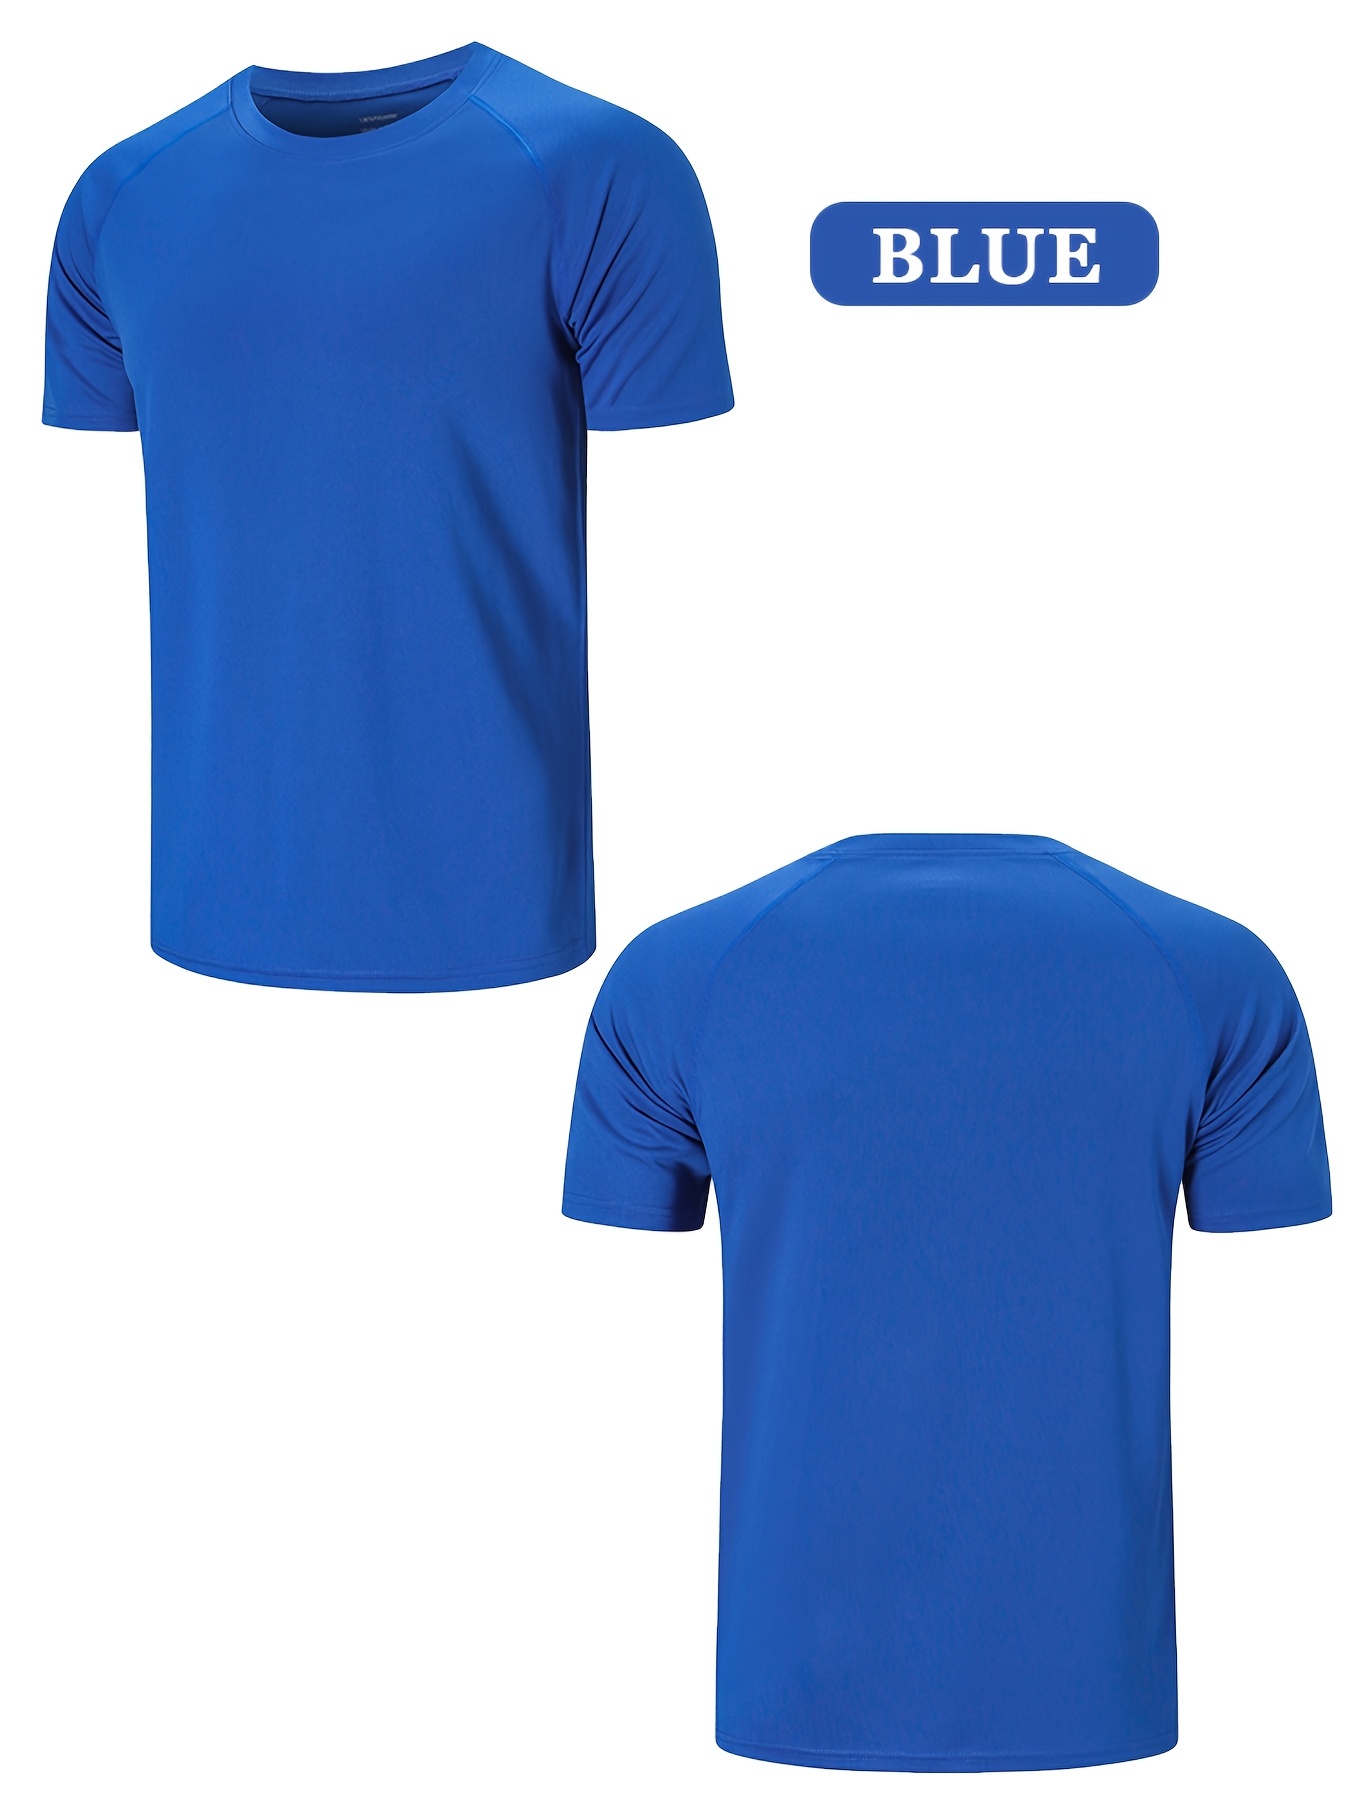 ZENGVEE 3 Piezas Camiseta Tirantes Hombre in my #kit: Deportes,  senderismo, camping